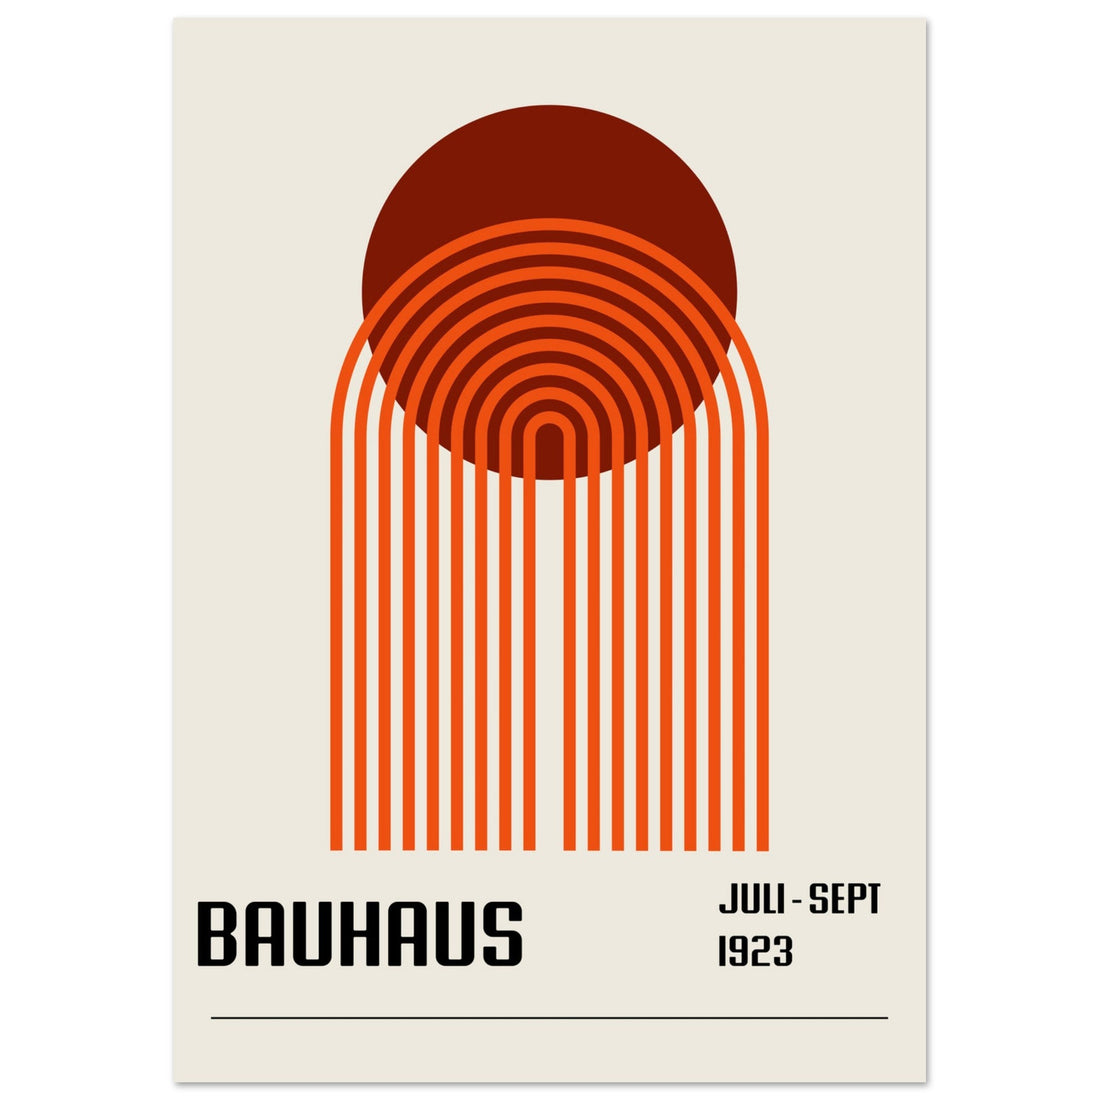 Bauhaus Orange Retro Poster, No. 111, abstract, architecture, design, #illieeart